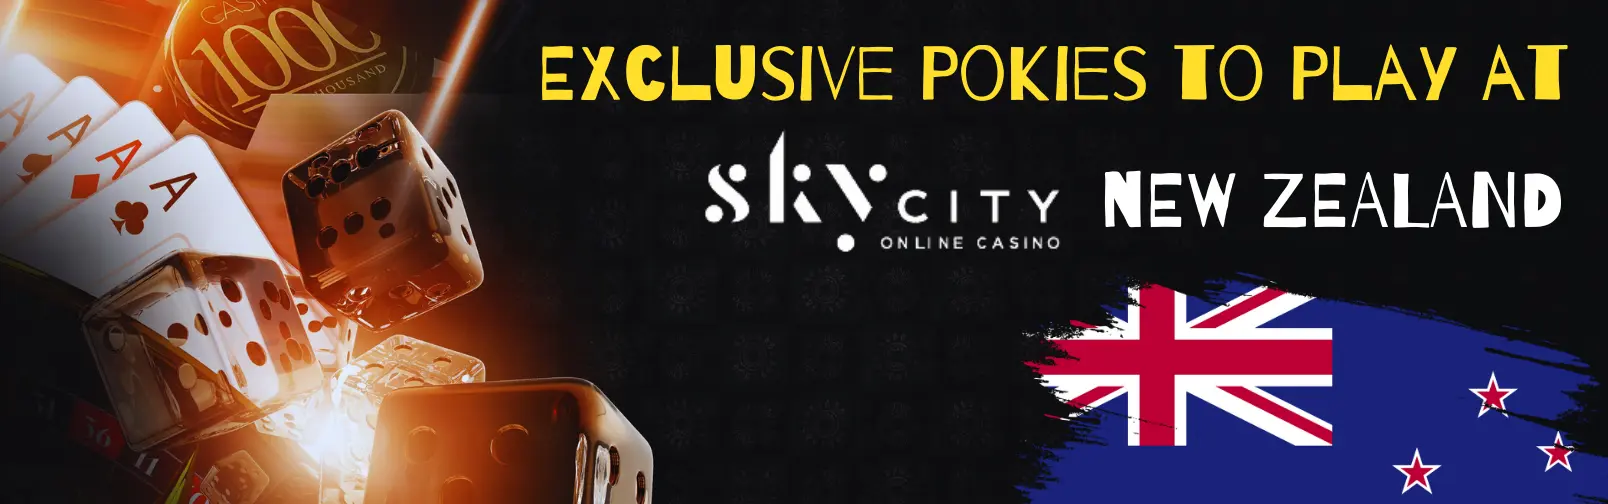 Exclusive Pokies to Play at Skycity Online Casino in New Zealand